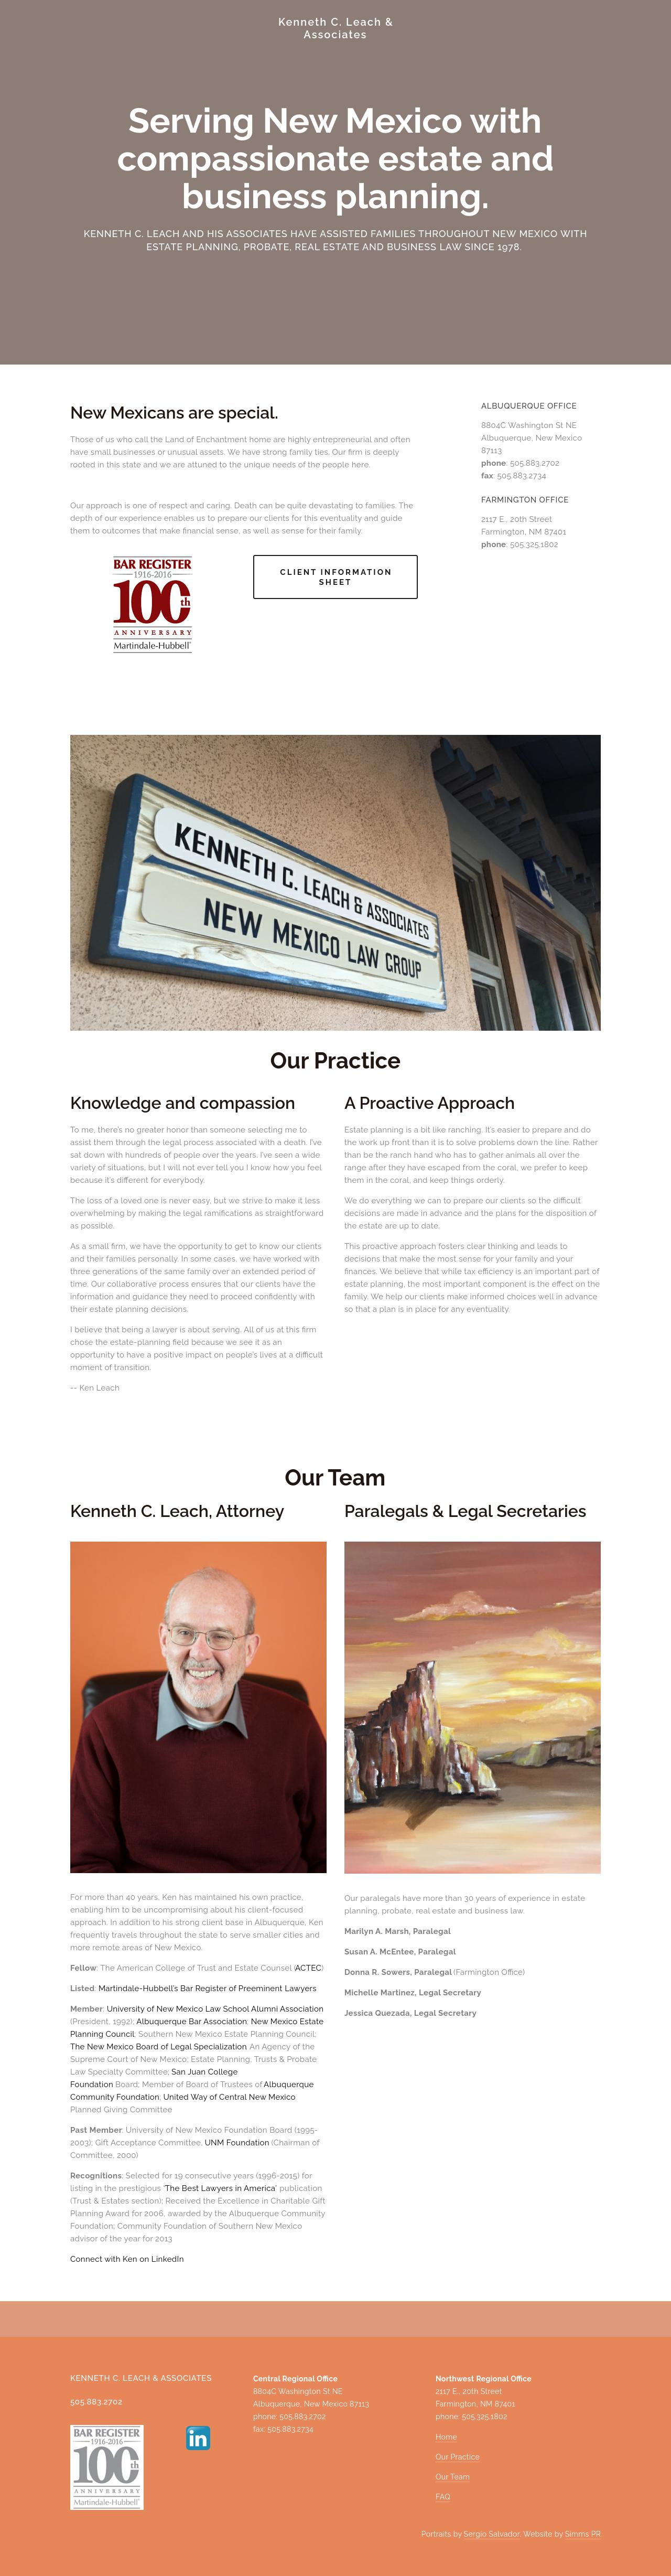 Leach Kenneth C & Associates PC - Albuquerque NM Lawyers